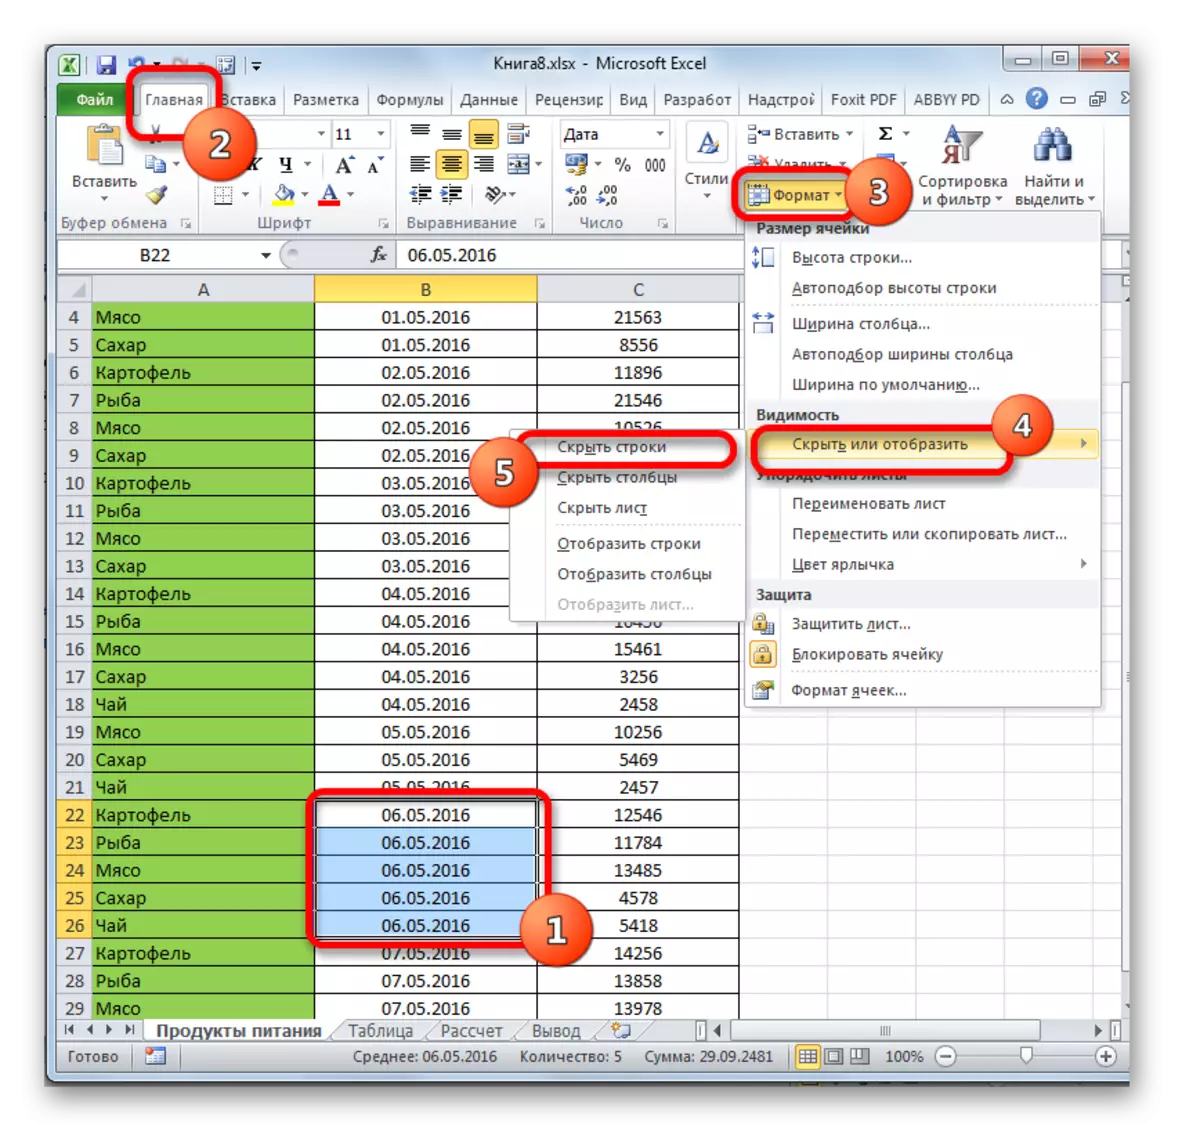 Kaŝi ŝnurojn tra bendo de bendo en Microsoft Excel